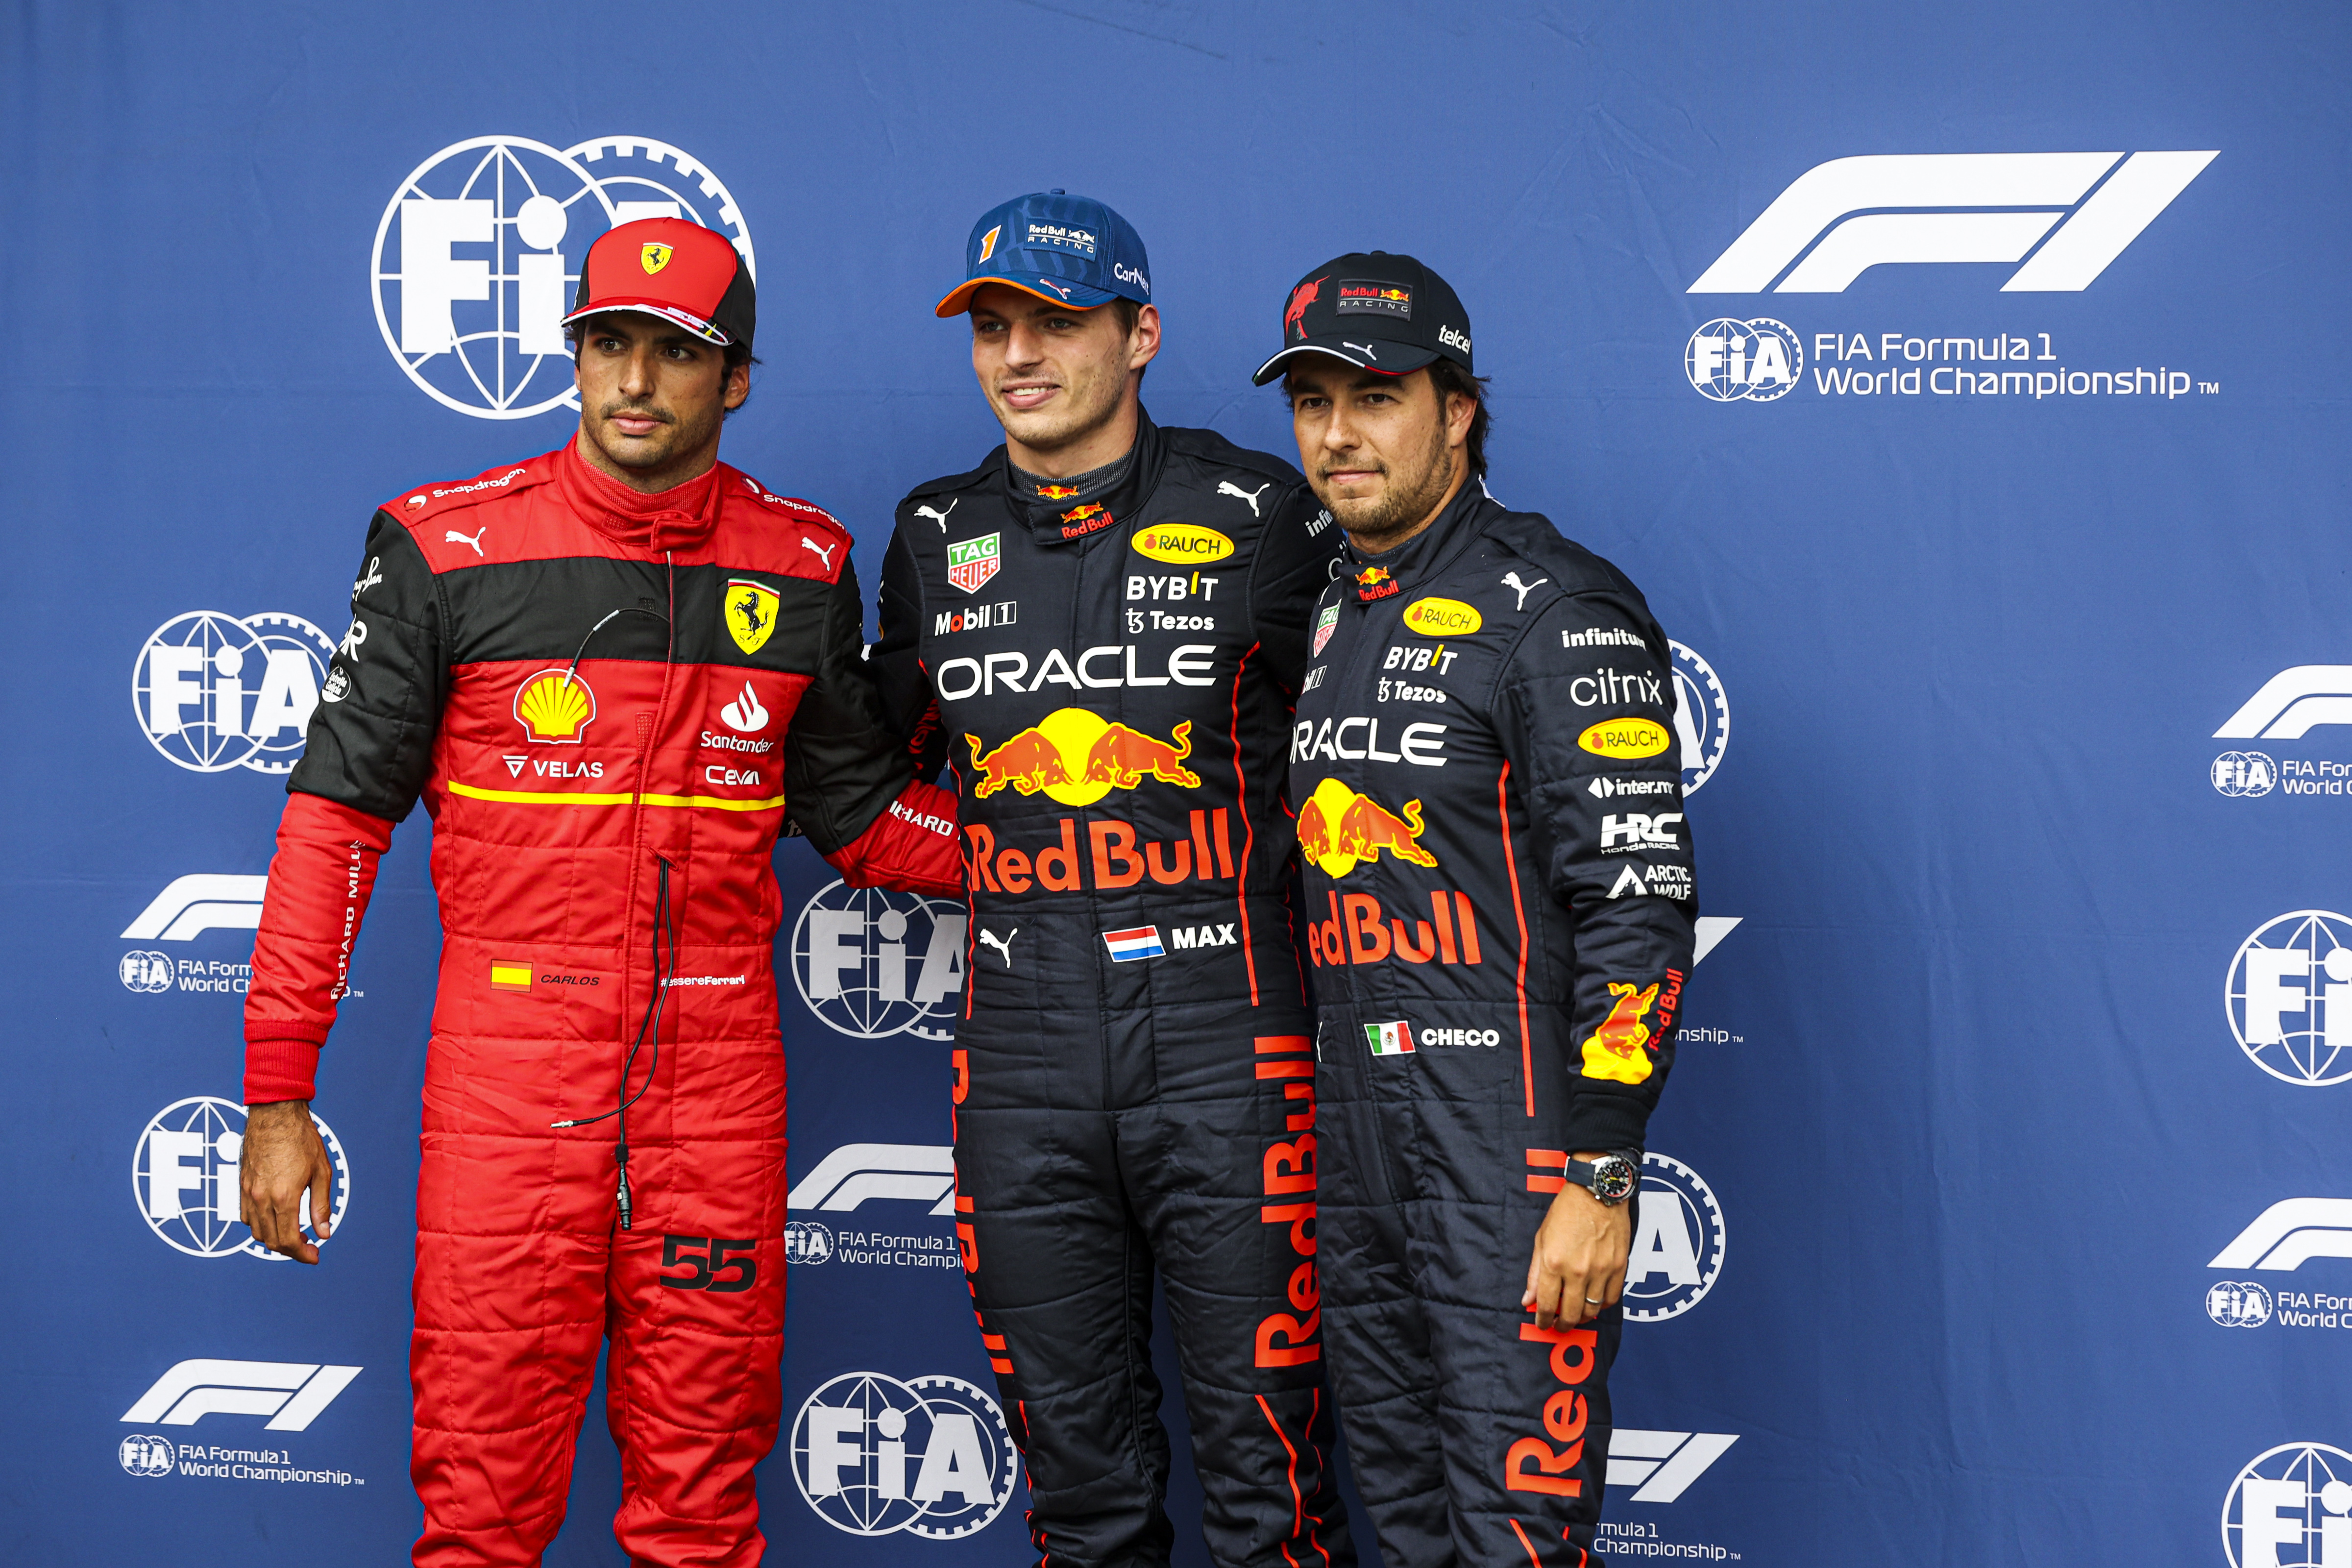 Max Verstappen dominated Qualifying for the Belgian Grand Prix, beating Fer...